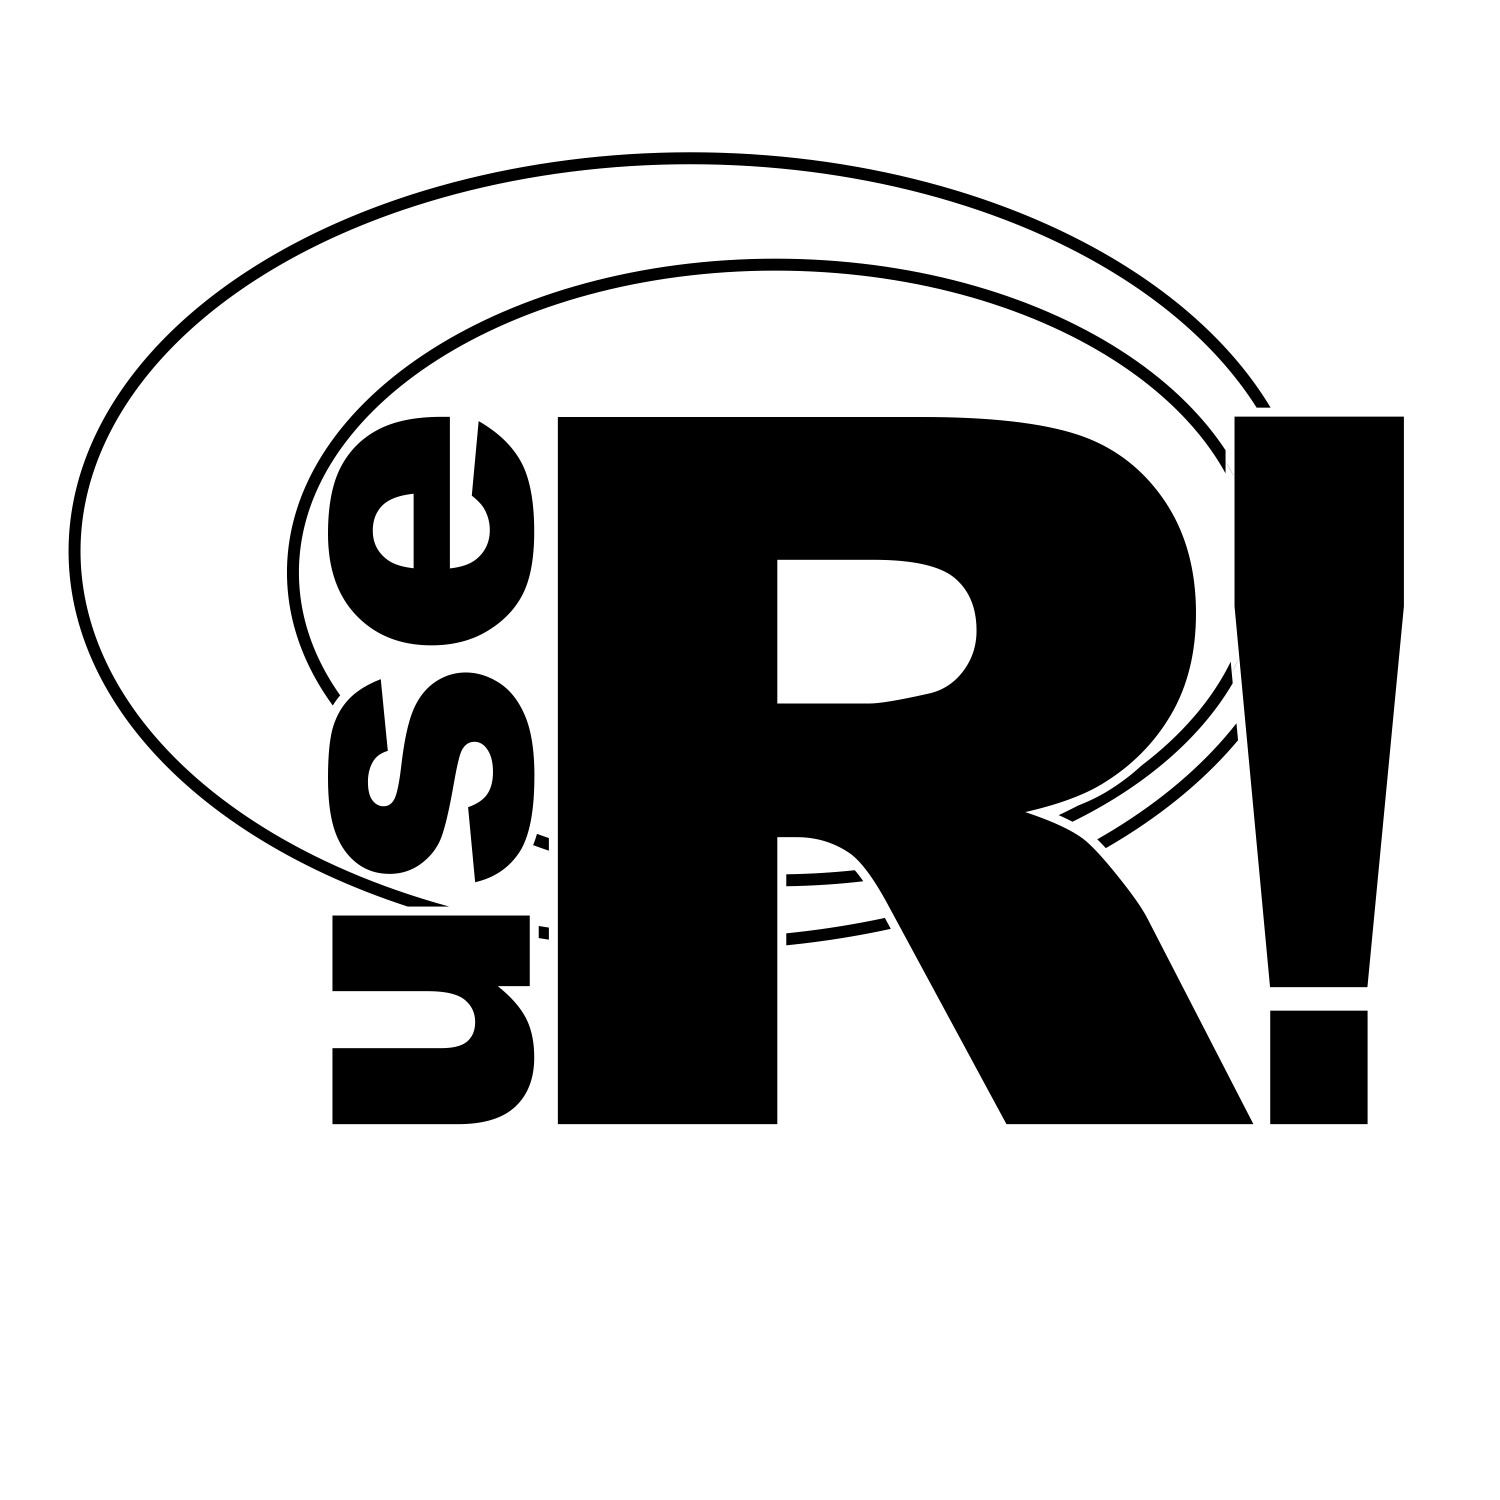 Global Organizing Committee logo